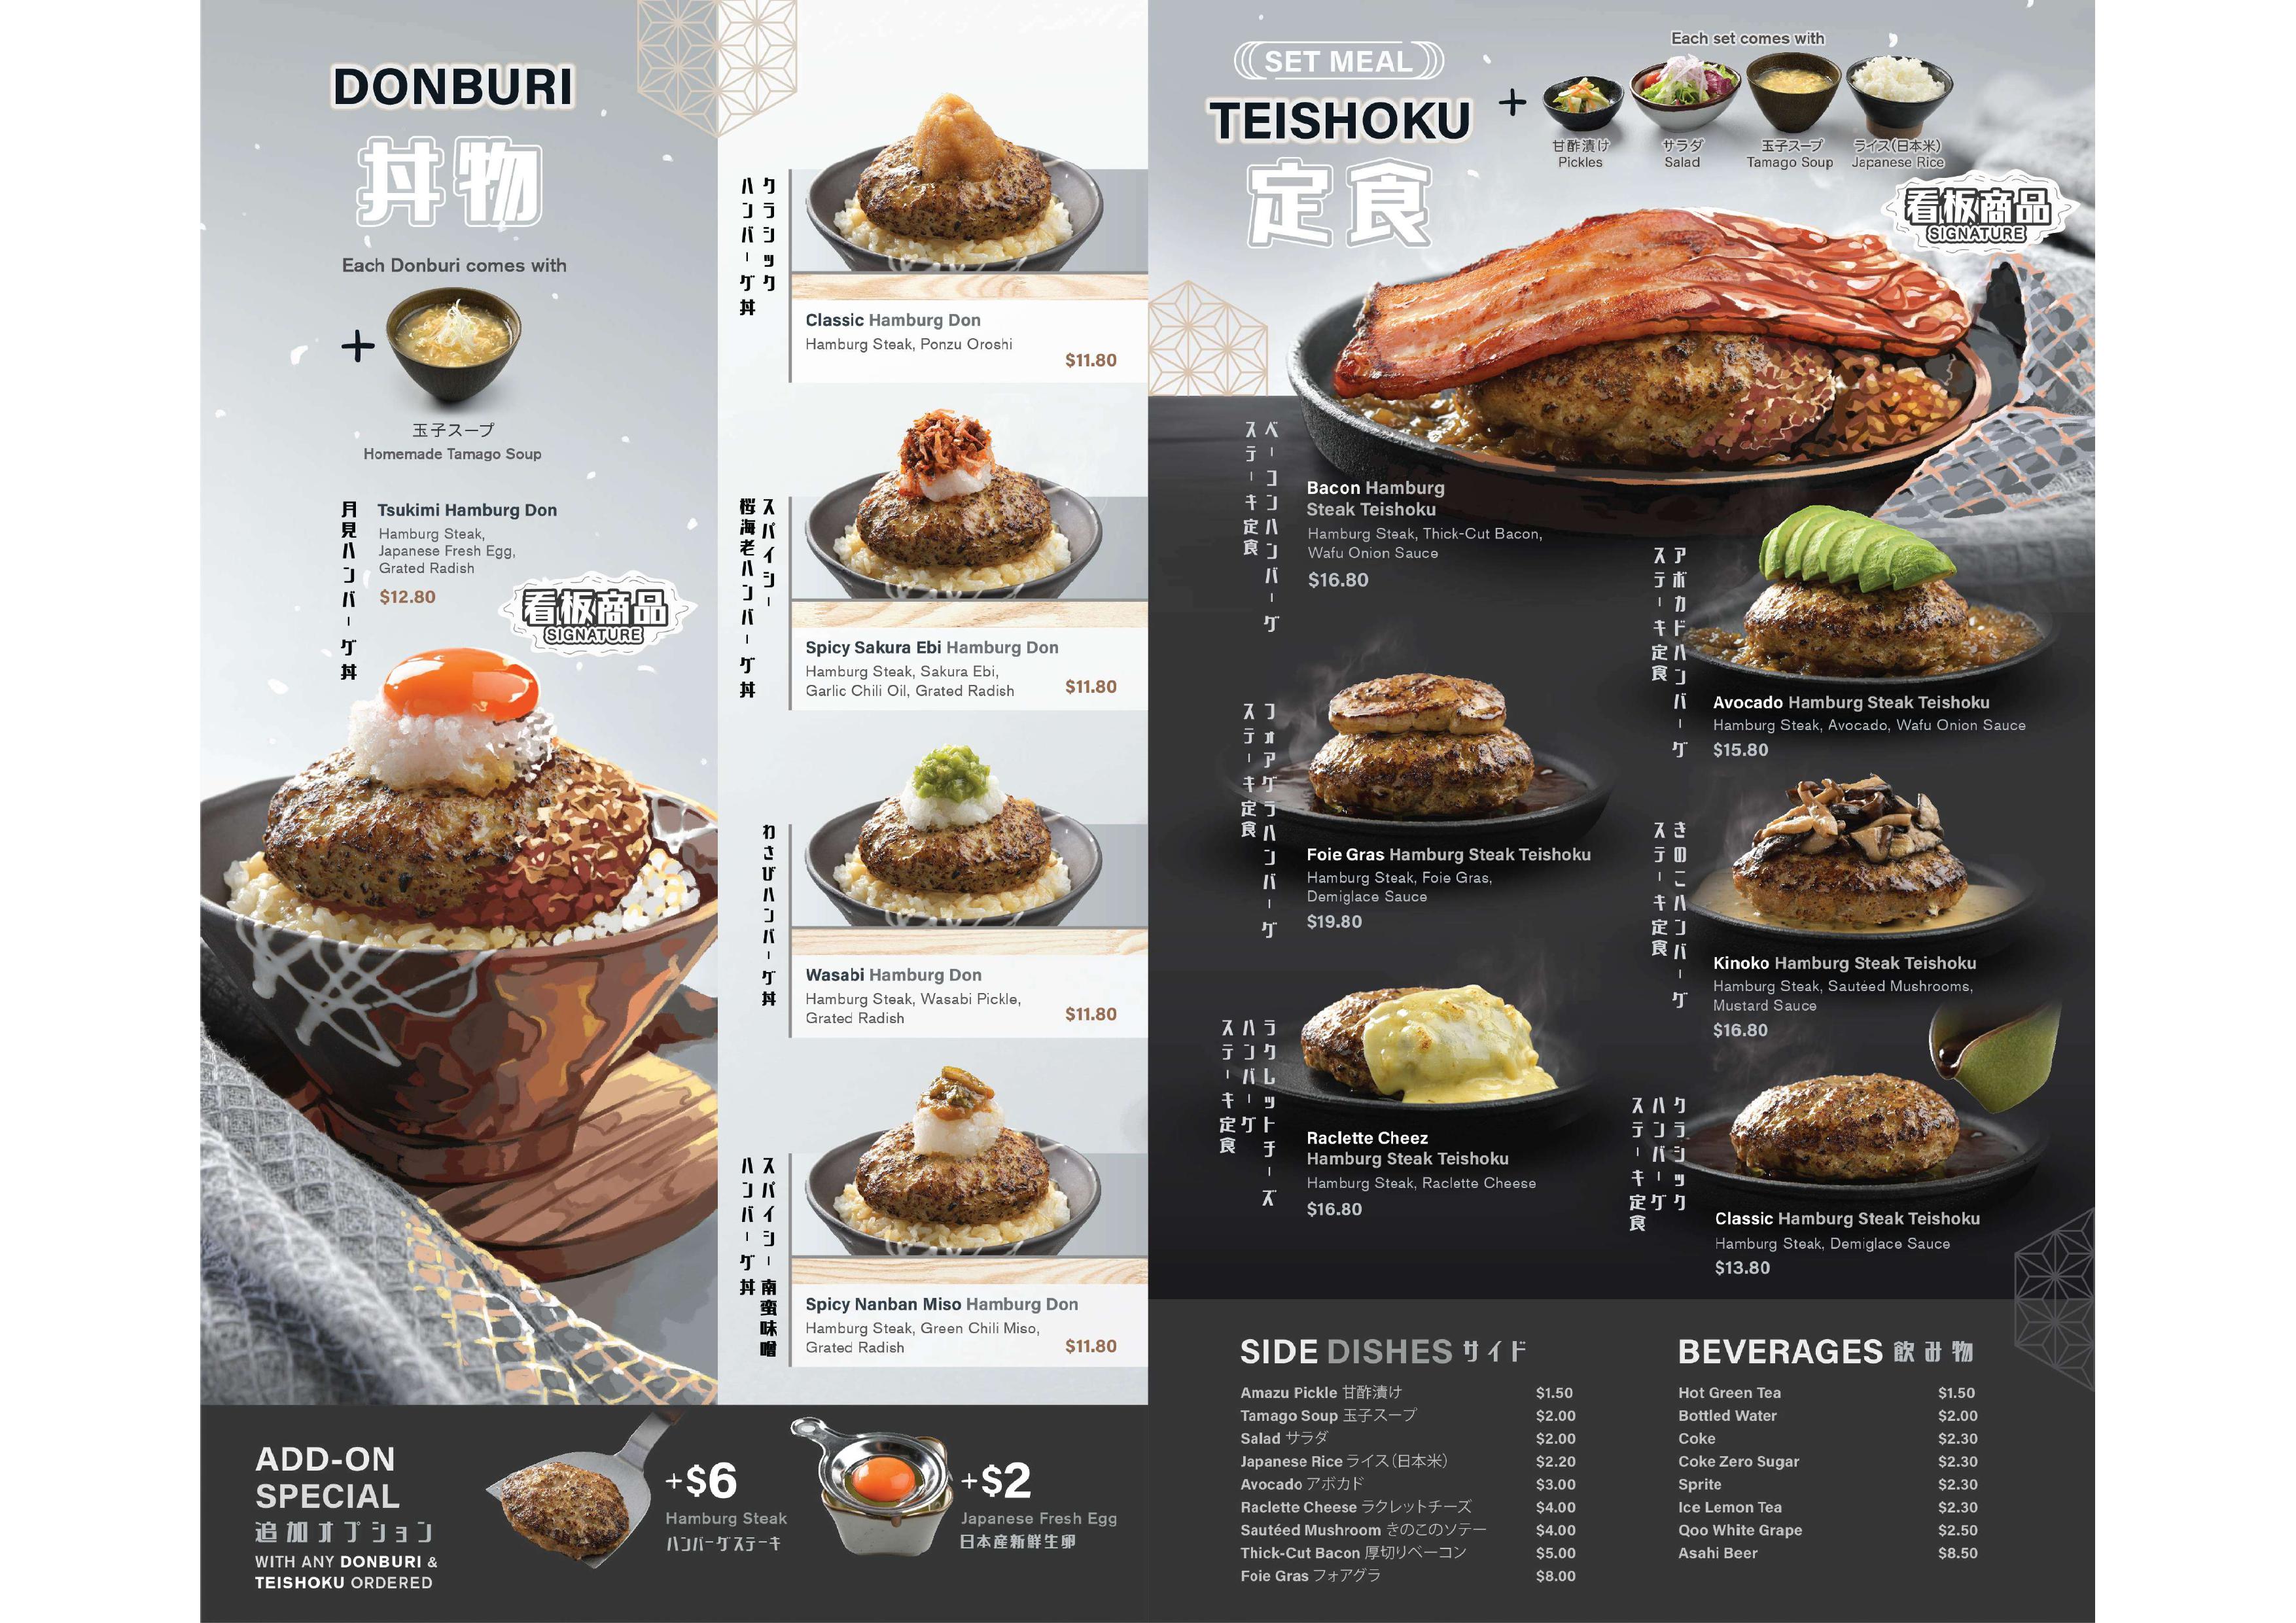 Lobang: Tsukimi Hamburg selling "seriously good" hamburg steak donburi at $5.80 (U.P. $12.80) from 3 - 4 Sep 22 - 5